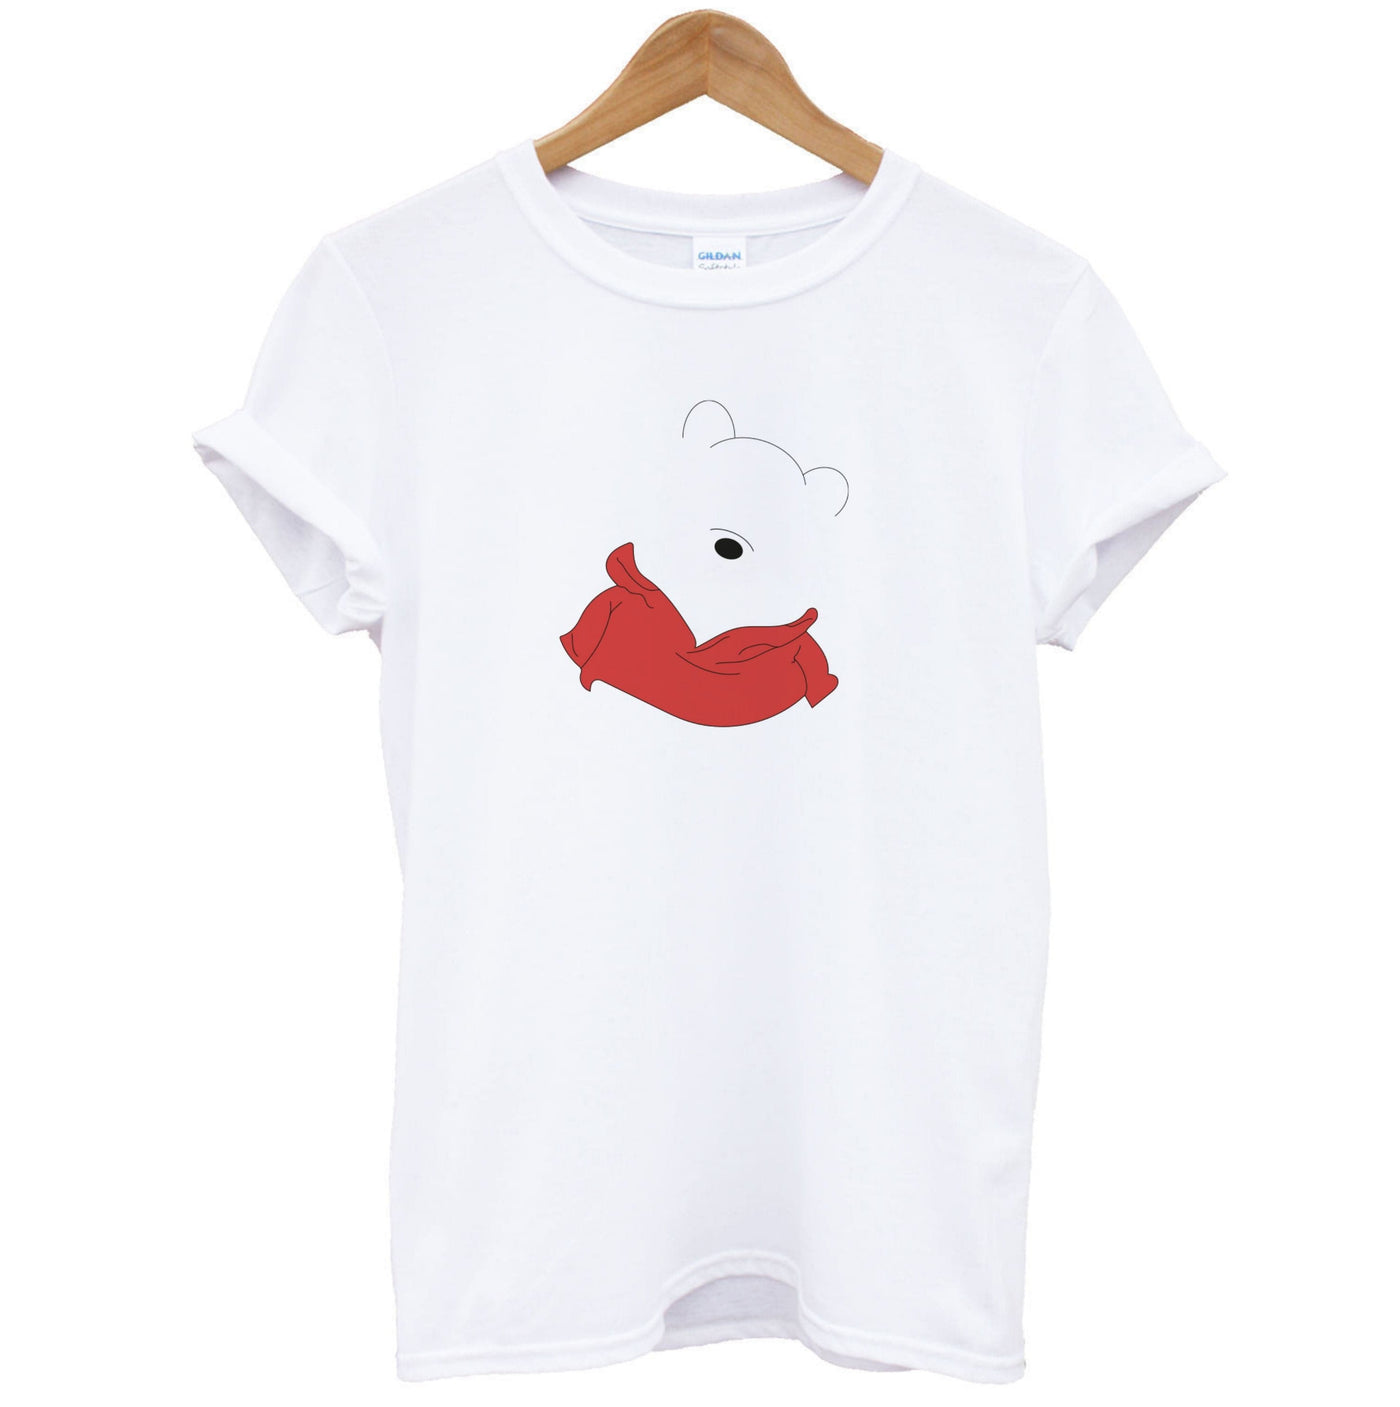 Faceless Winnie The Pooh T-Shirt